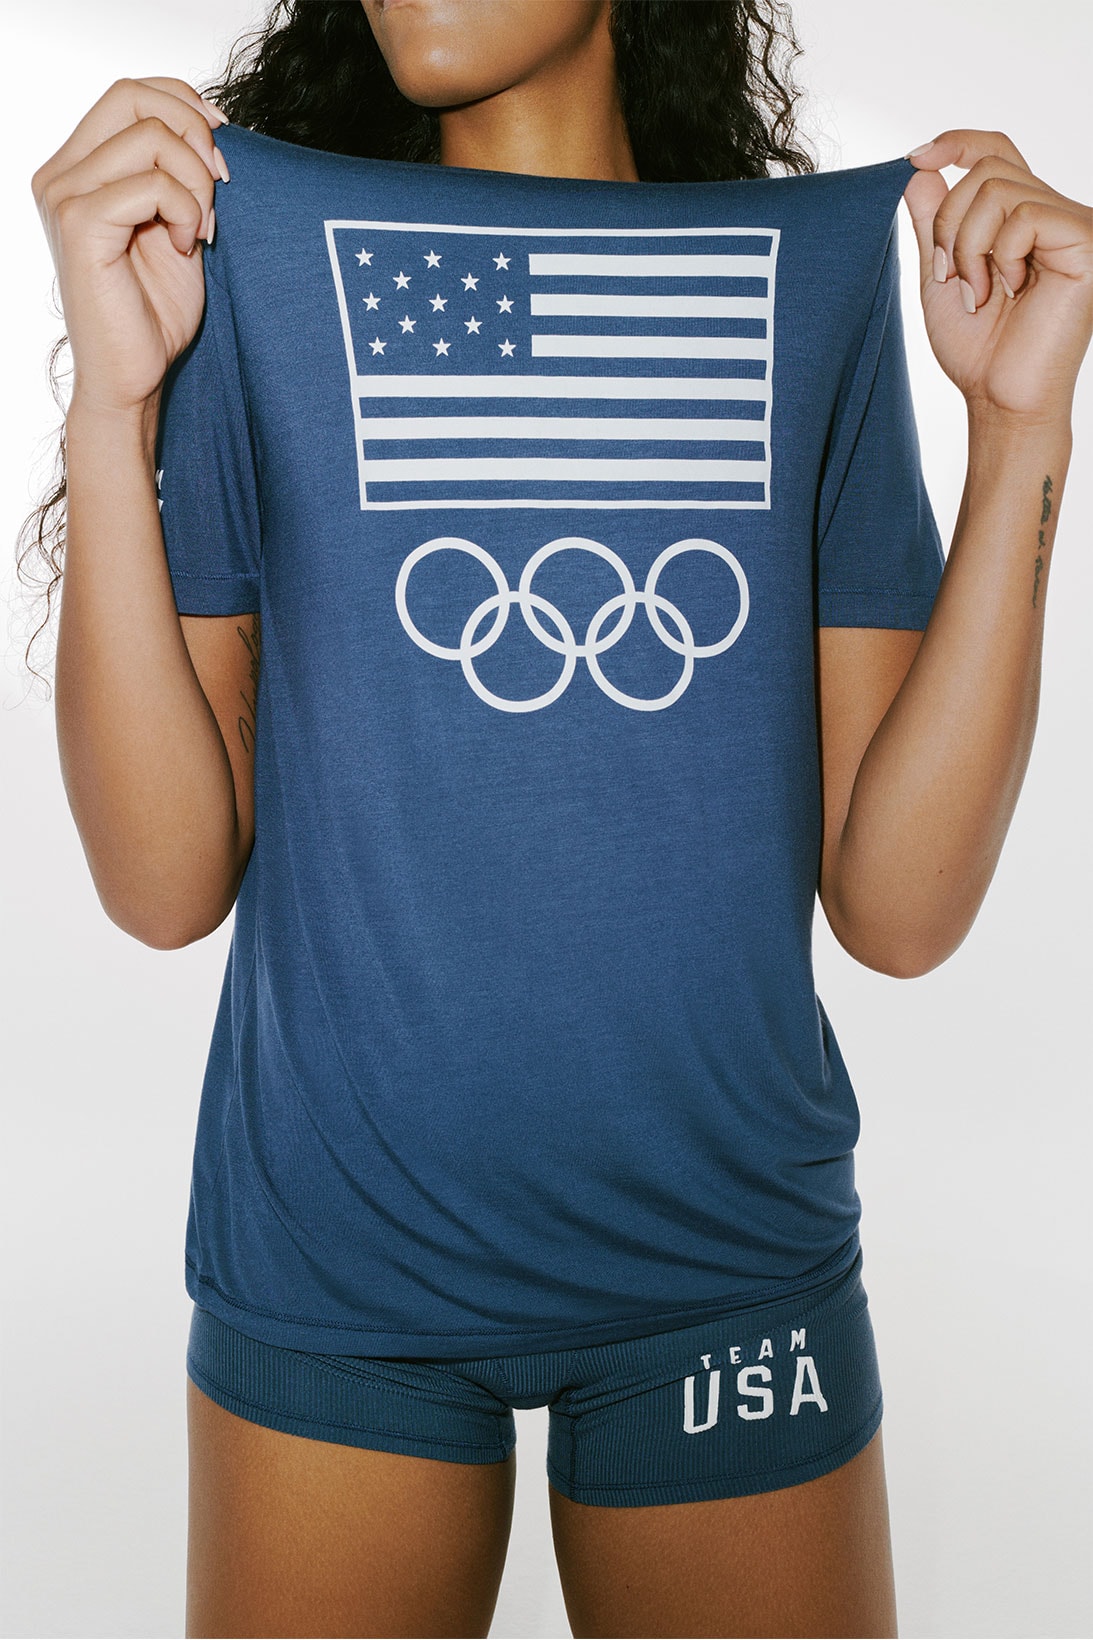 SKIMS Kim Kardashian Team USA 2020 Tokyo Olympics Paralympics Official Underwear Brand A'ja Wilson T-shirt Shorts